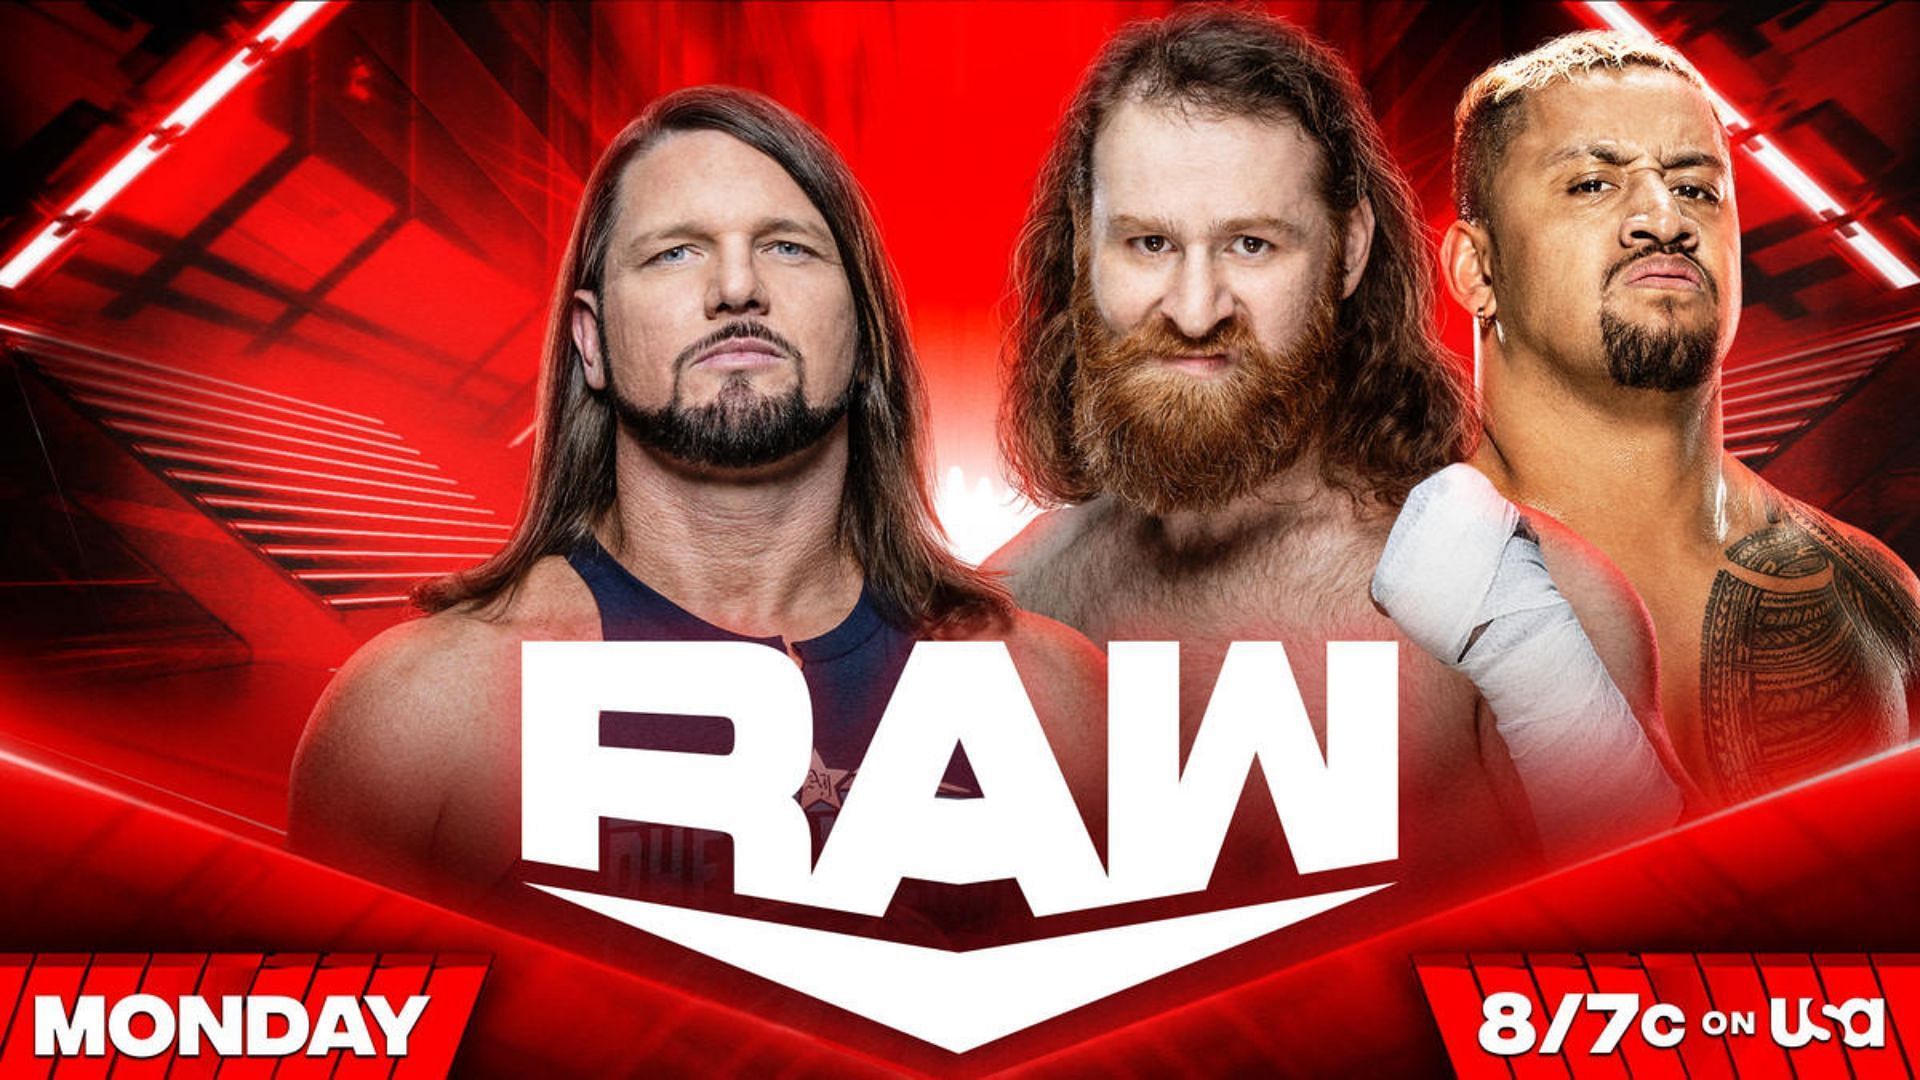 Watch out for AJ Styles vs. Sami Zayn on RAW tonight.